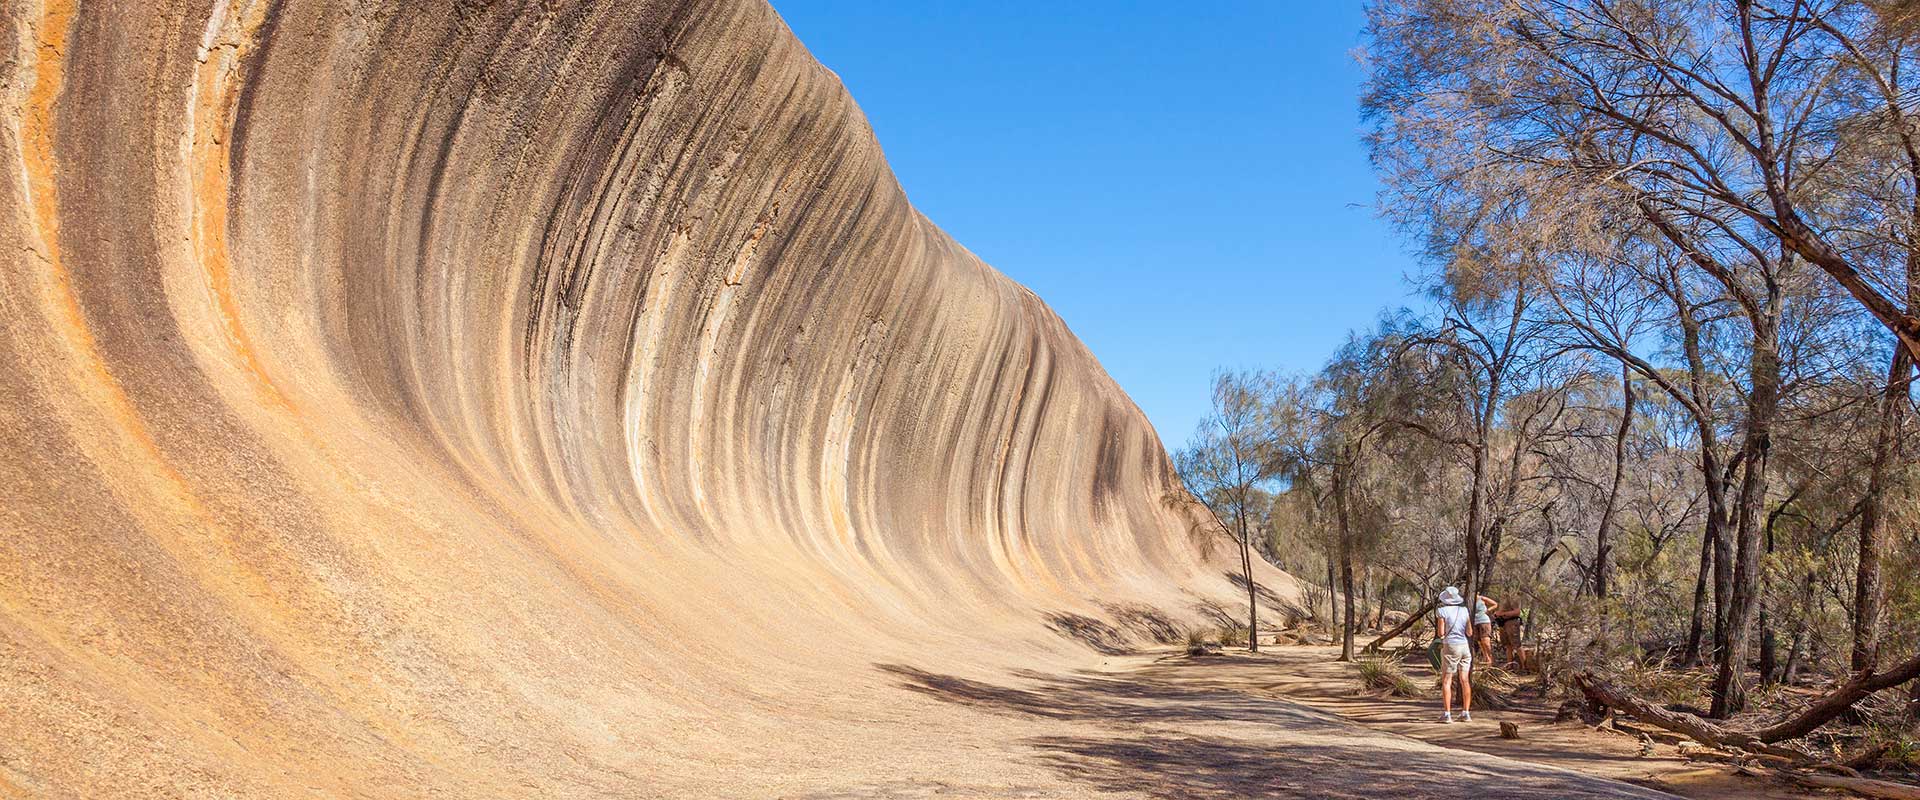 Long wave like shaped natural rock formation